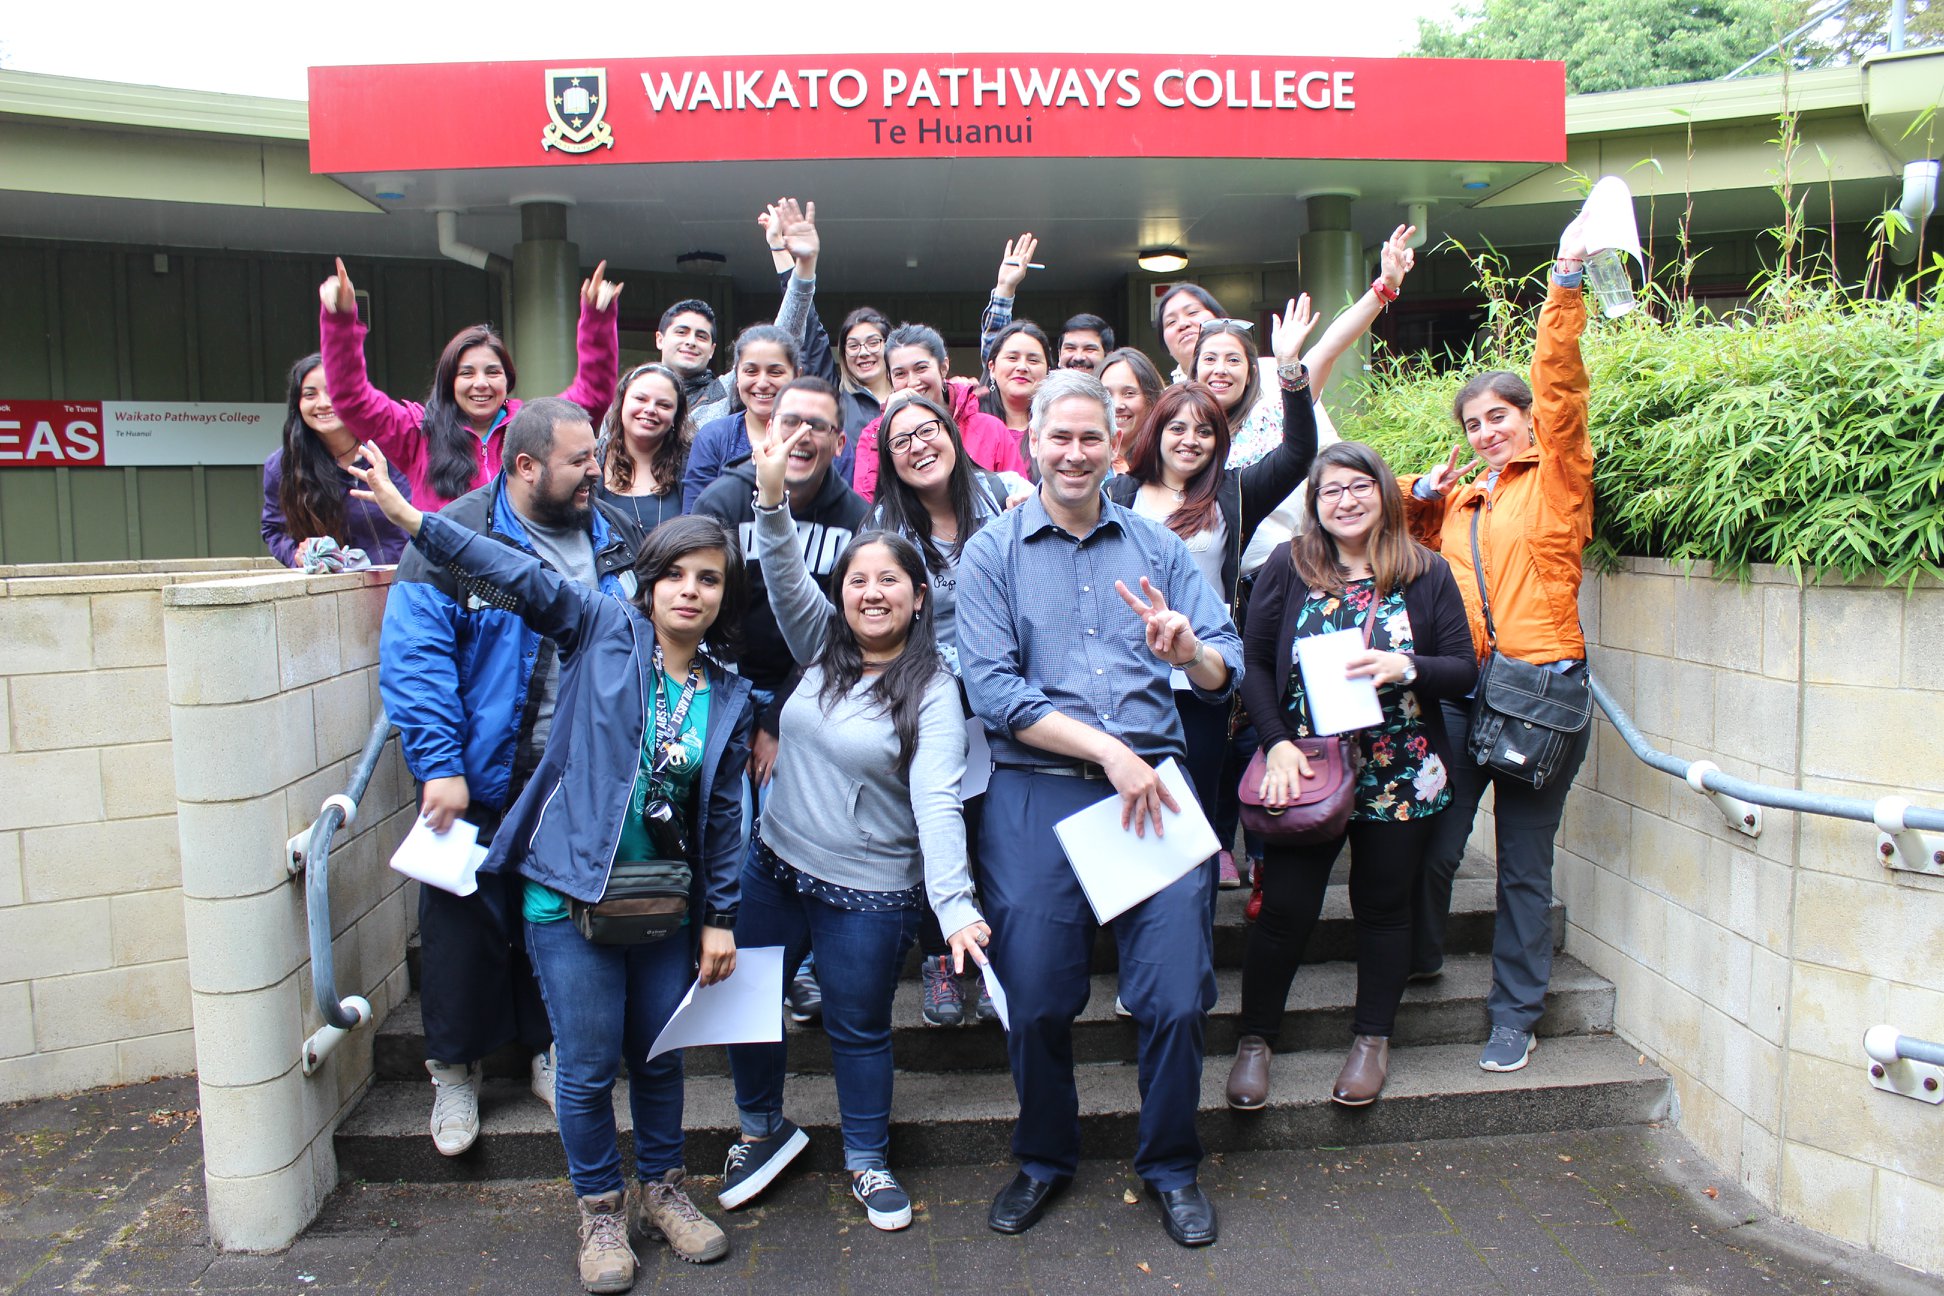 University of Waikato - Pathways College